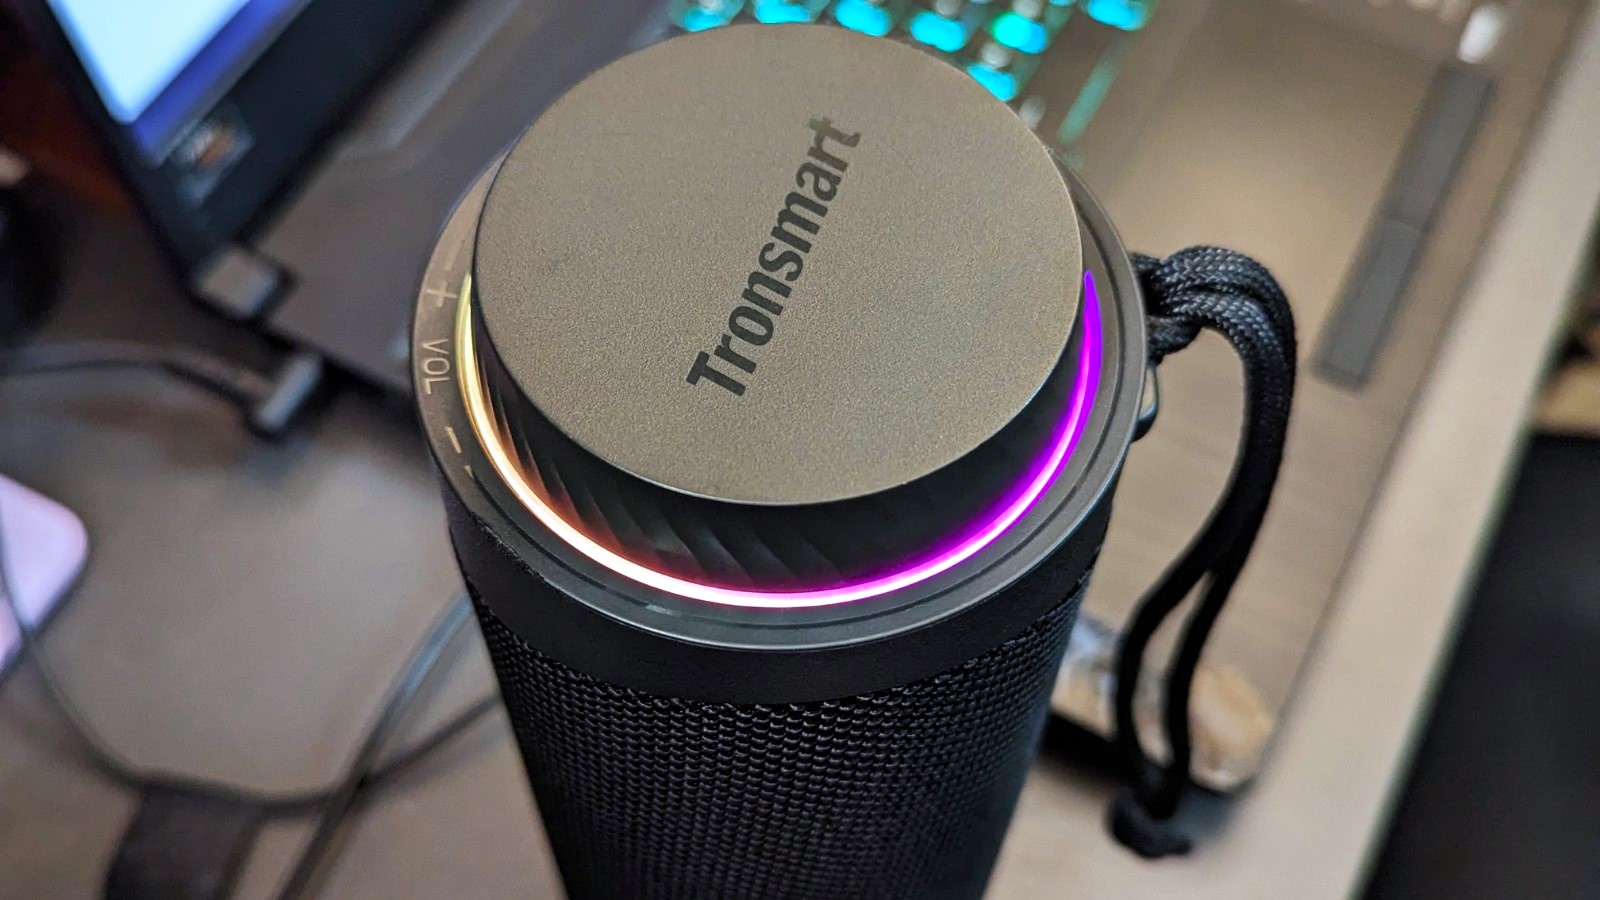 Tronsmart T7 taşınabilir Bluetooth hoparlör zil sesi ışığı üstte